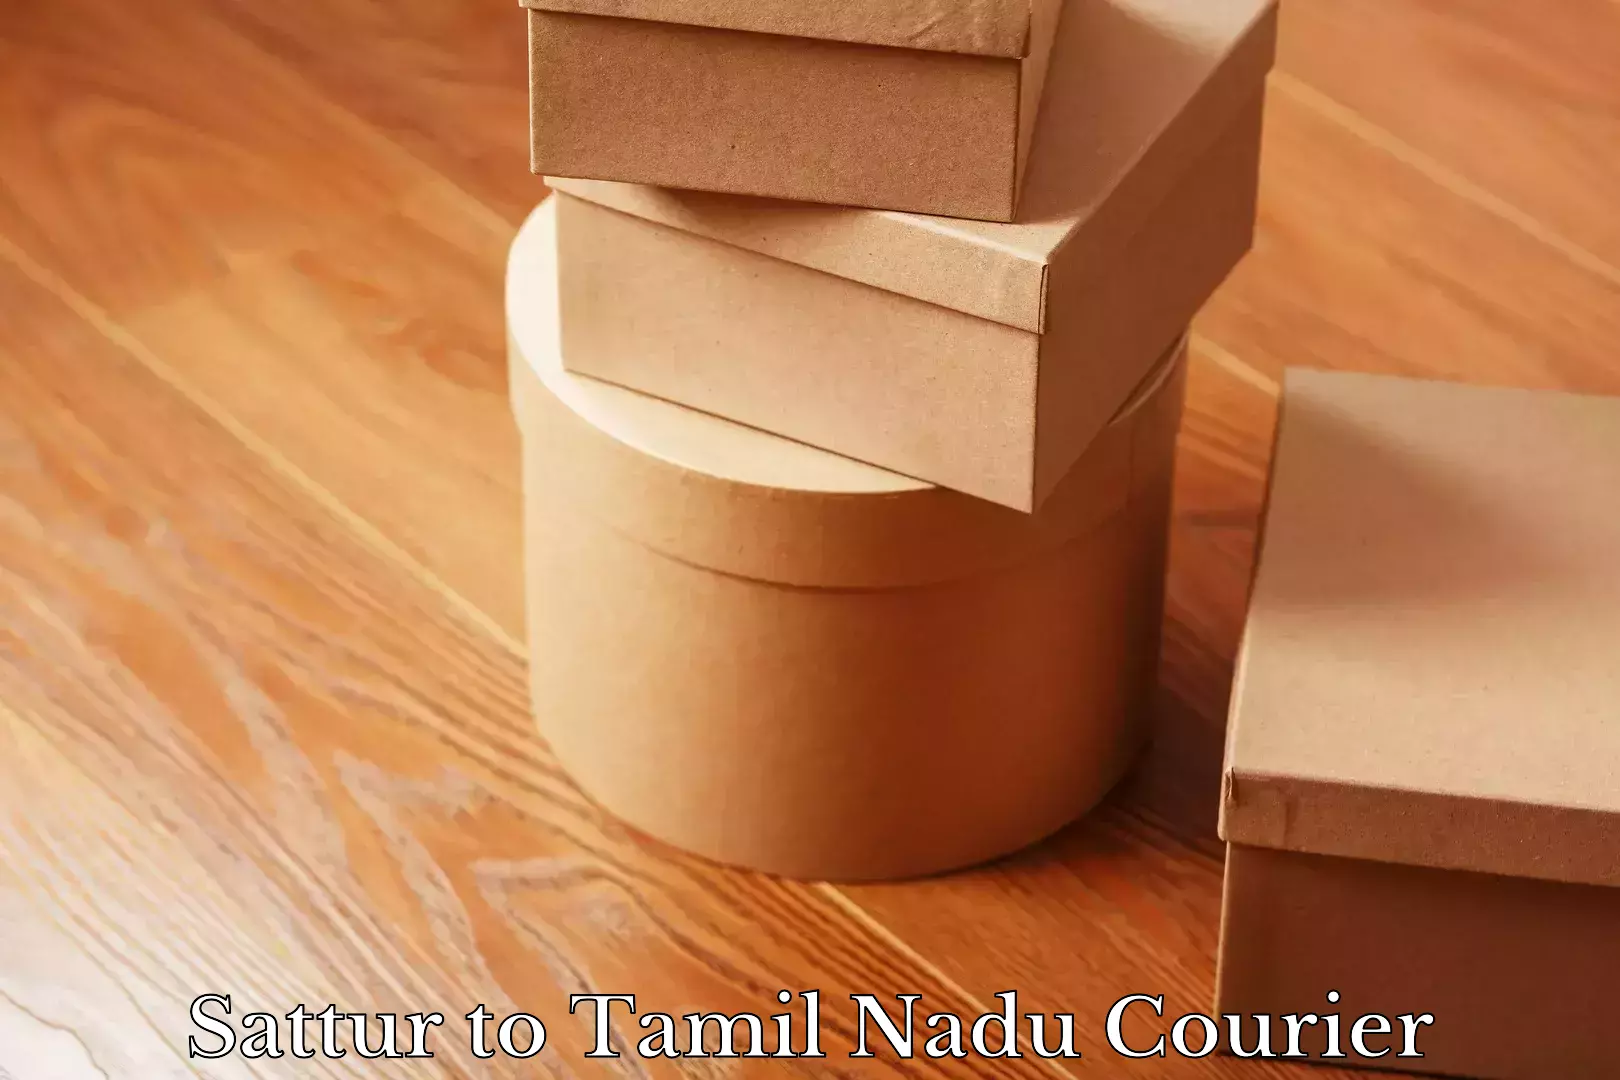 Courier service comparison Sattur to Tamil Nadu